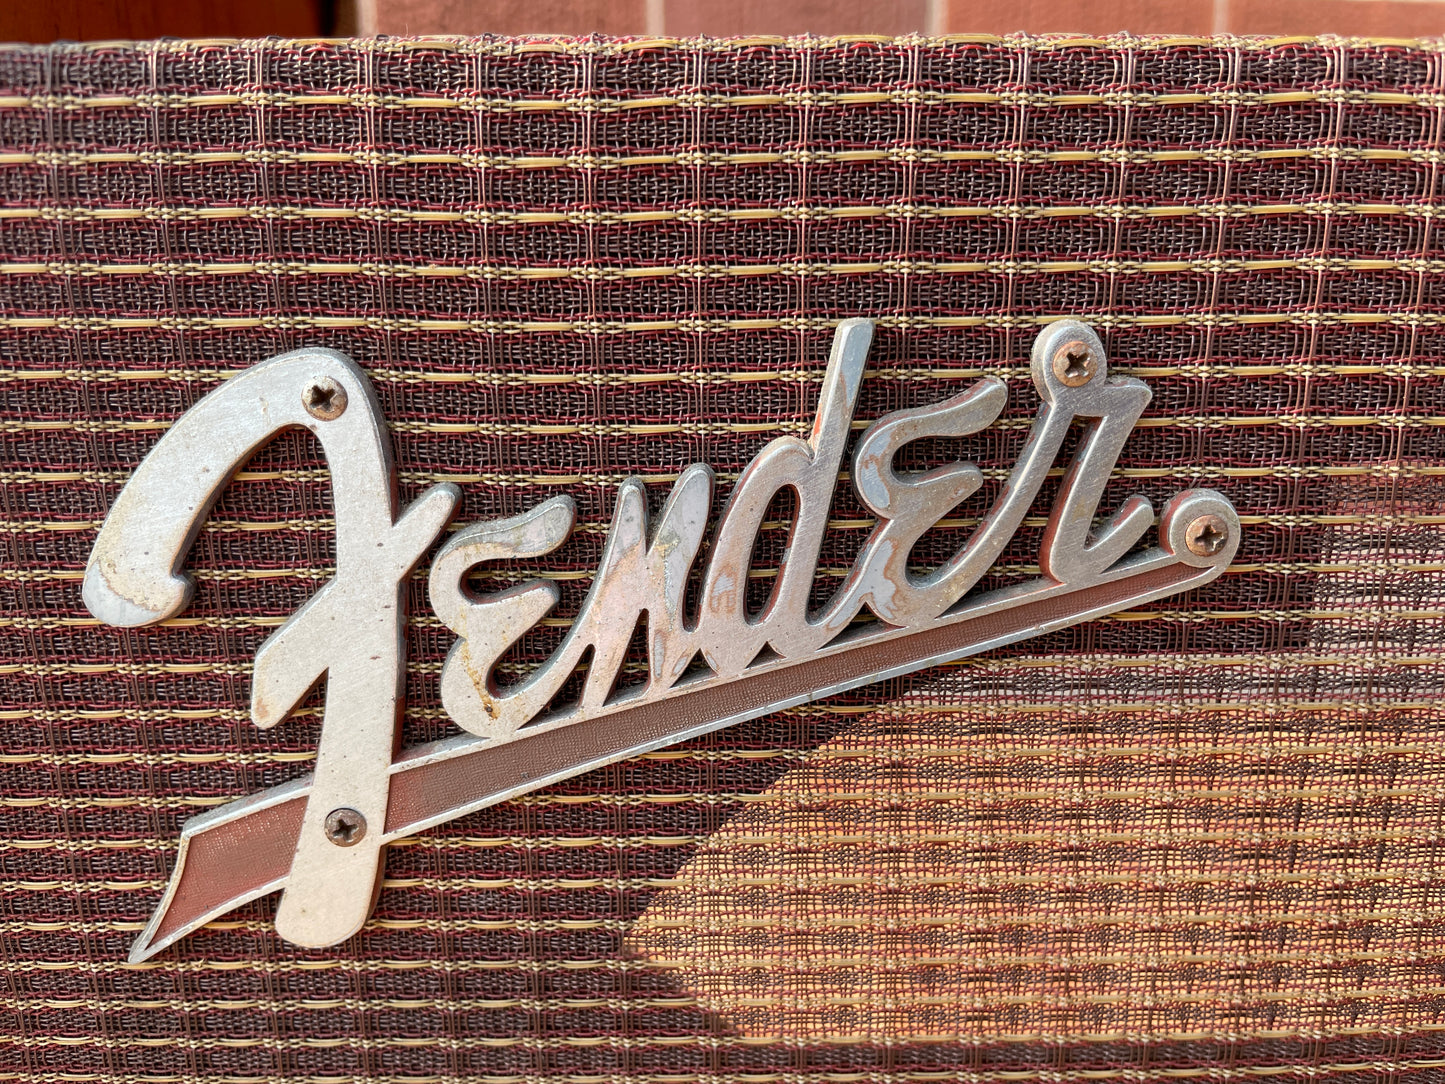 1959 Fender Vibrasonic Combo Amplifier Brown Tolex Cabinet Model 5G13 Label